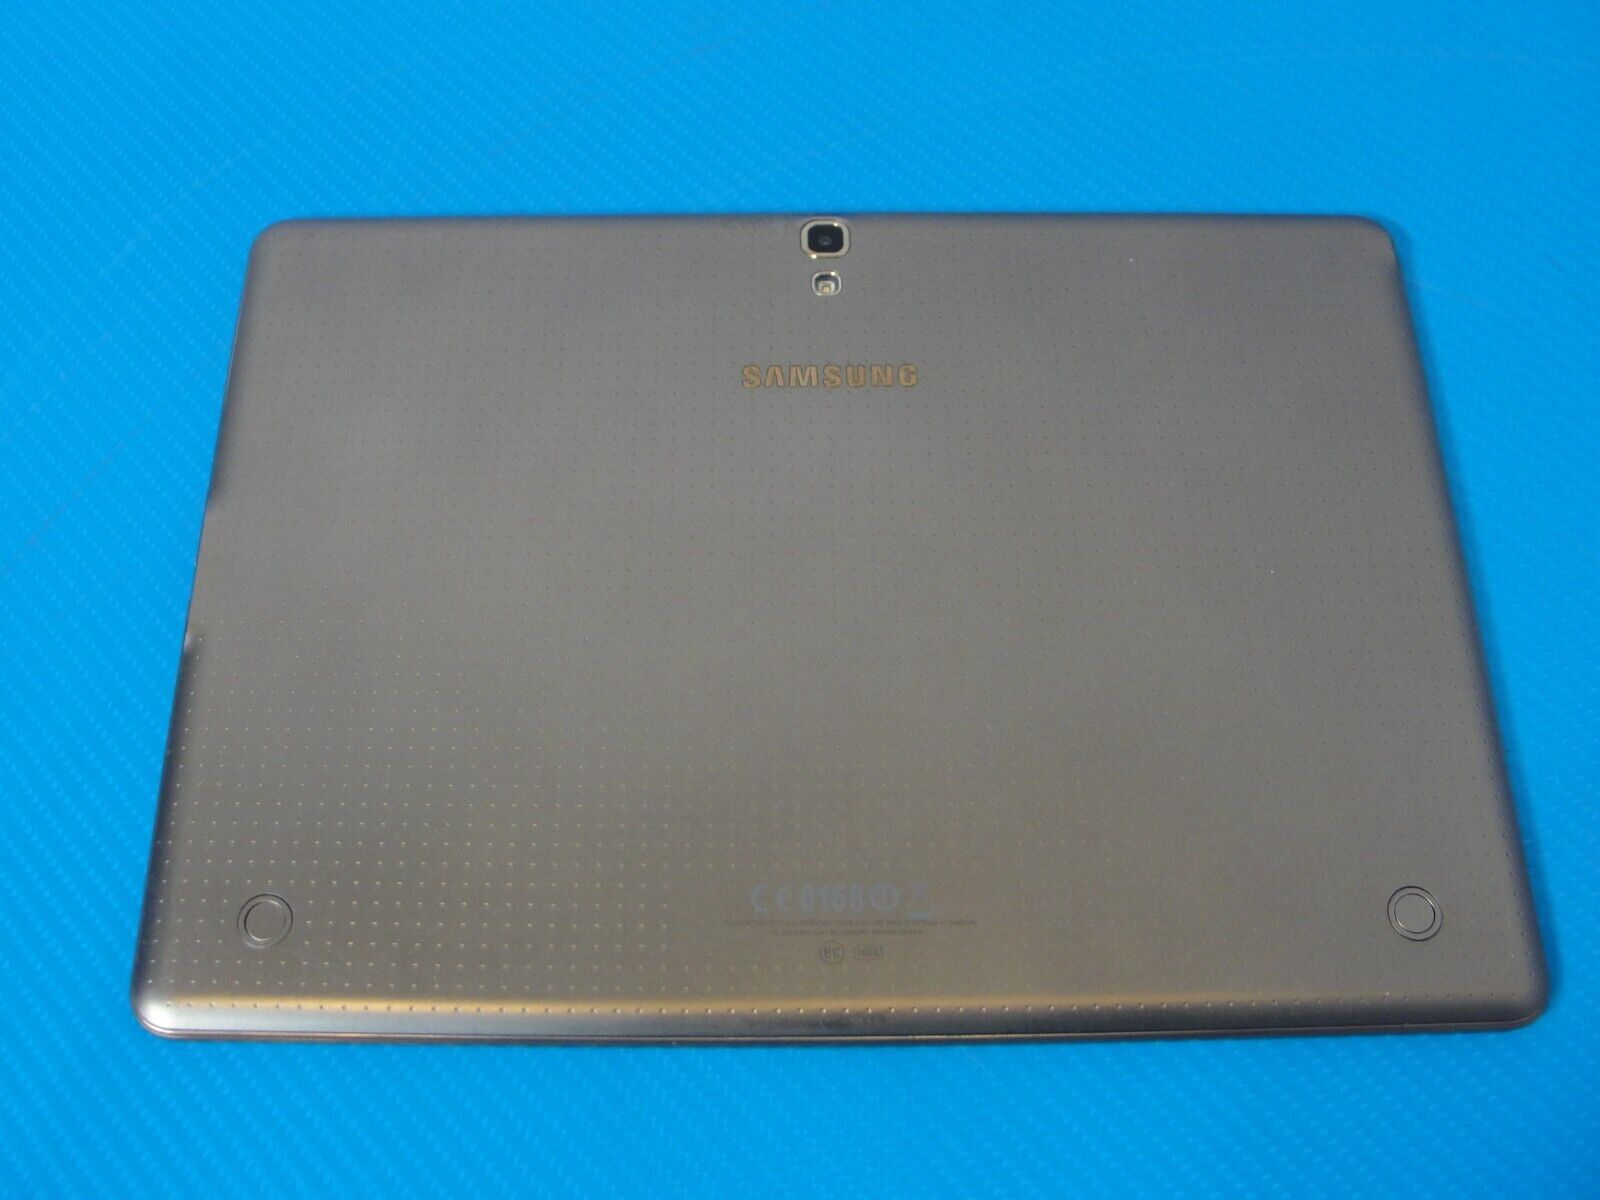 Samsung Galaxy Tab S SM-T800 16GB, Wi-Fi, 10.5in - Bronze Gold /Very Good